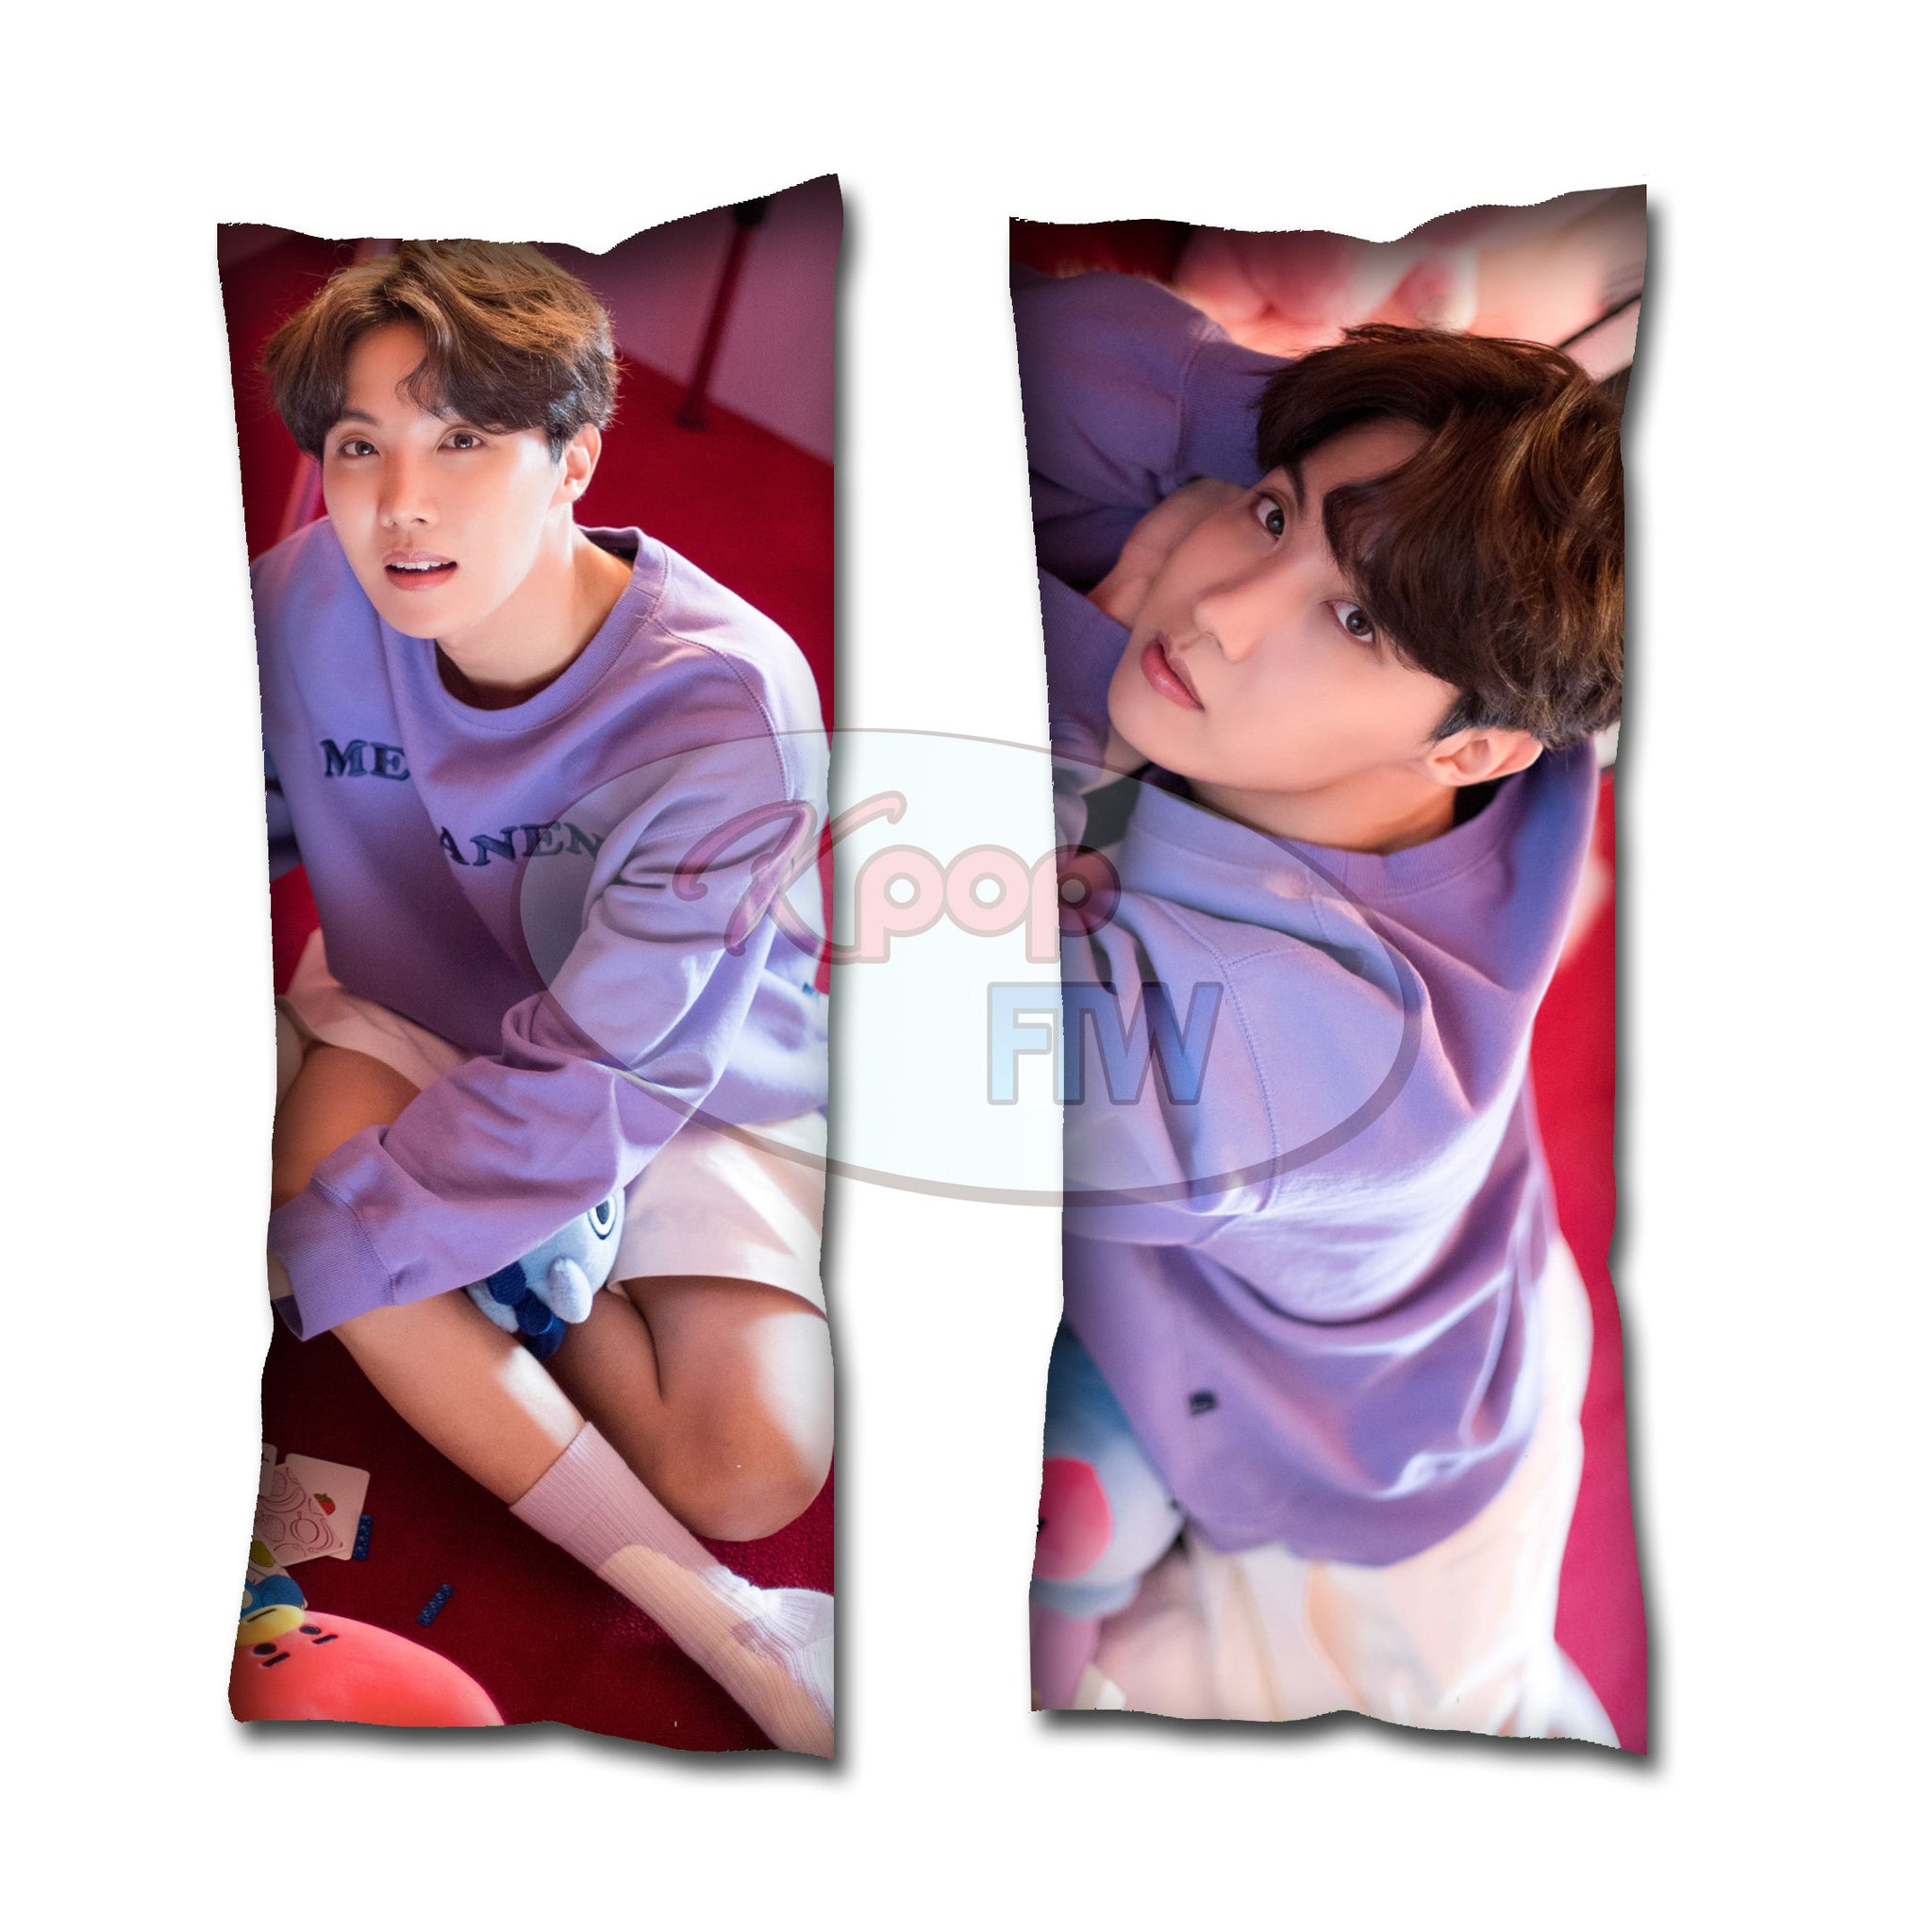 BTS] BMA Jungkook Body Pillow - Kpop FTW